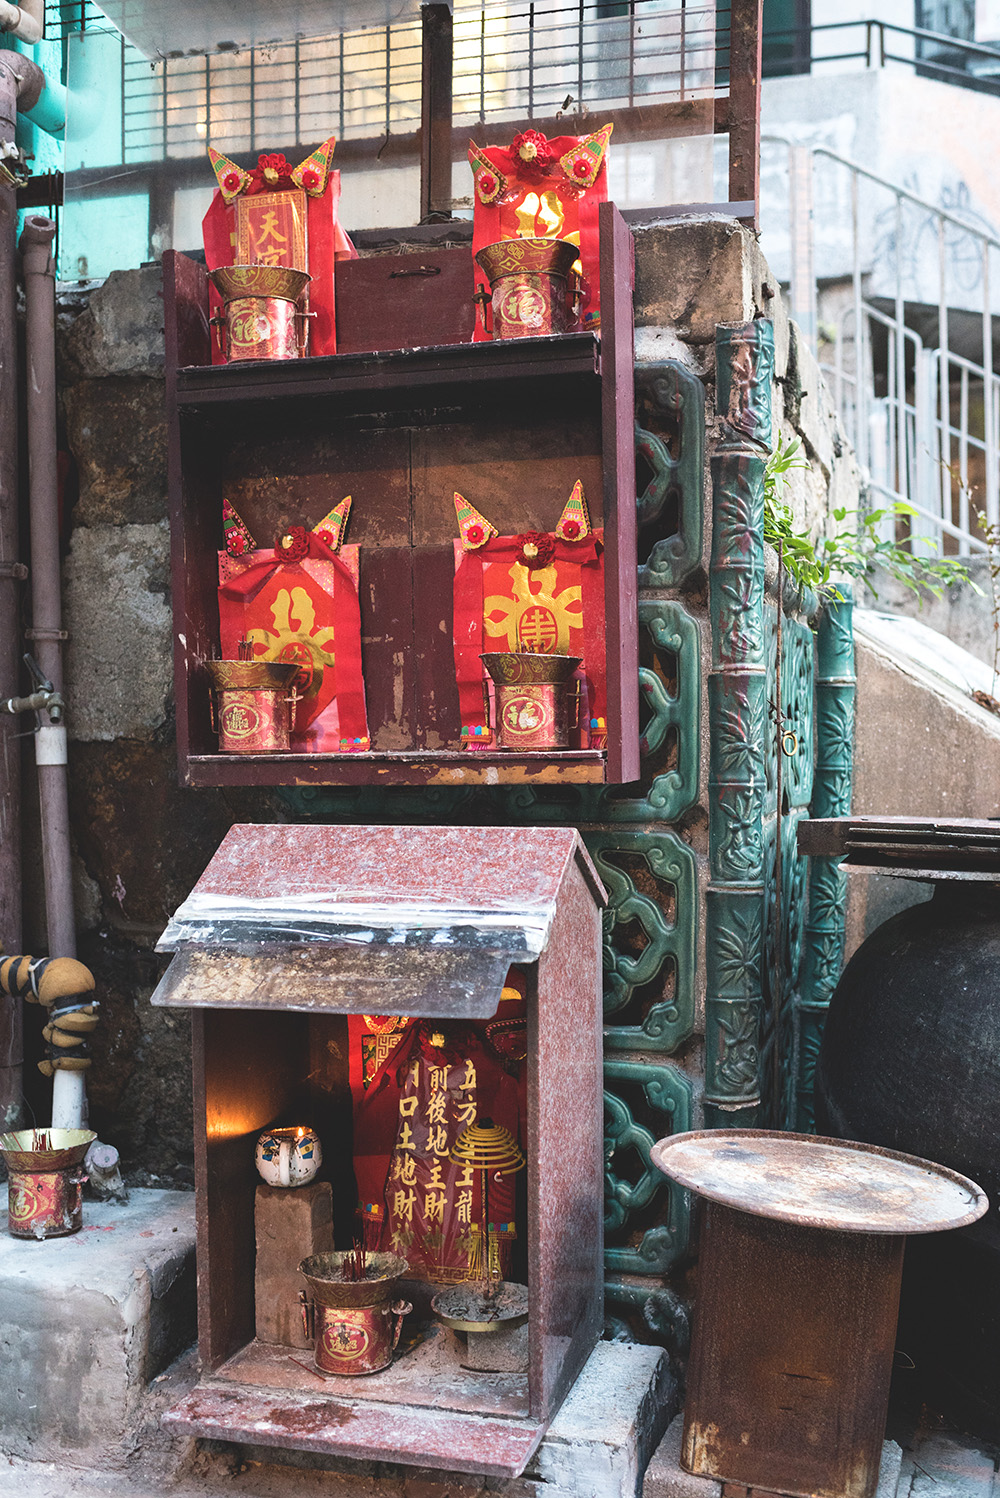 A street-side shrine in Hong Kong